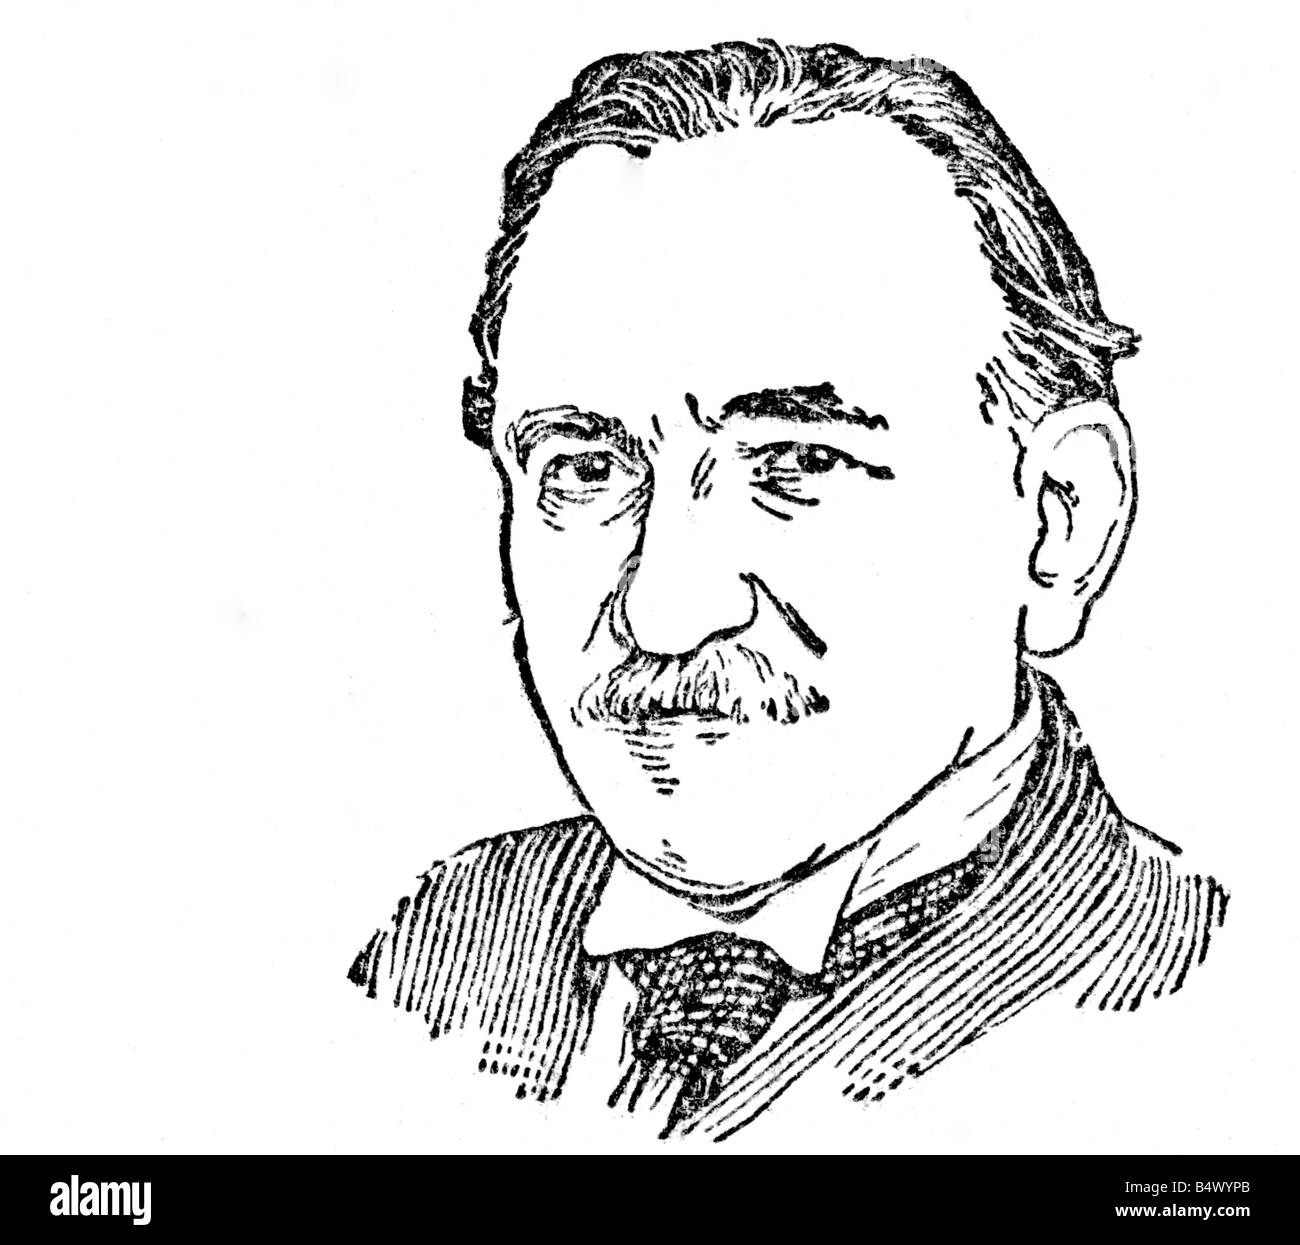 Foerster, Josef Bohuslav, 30.12.1859 - 29.5.1951, Czech composer, portrait, line drawing, , Stock Photo